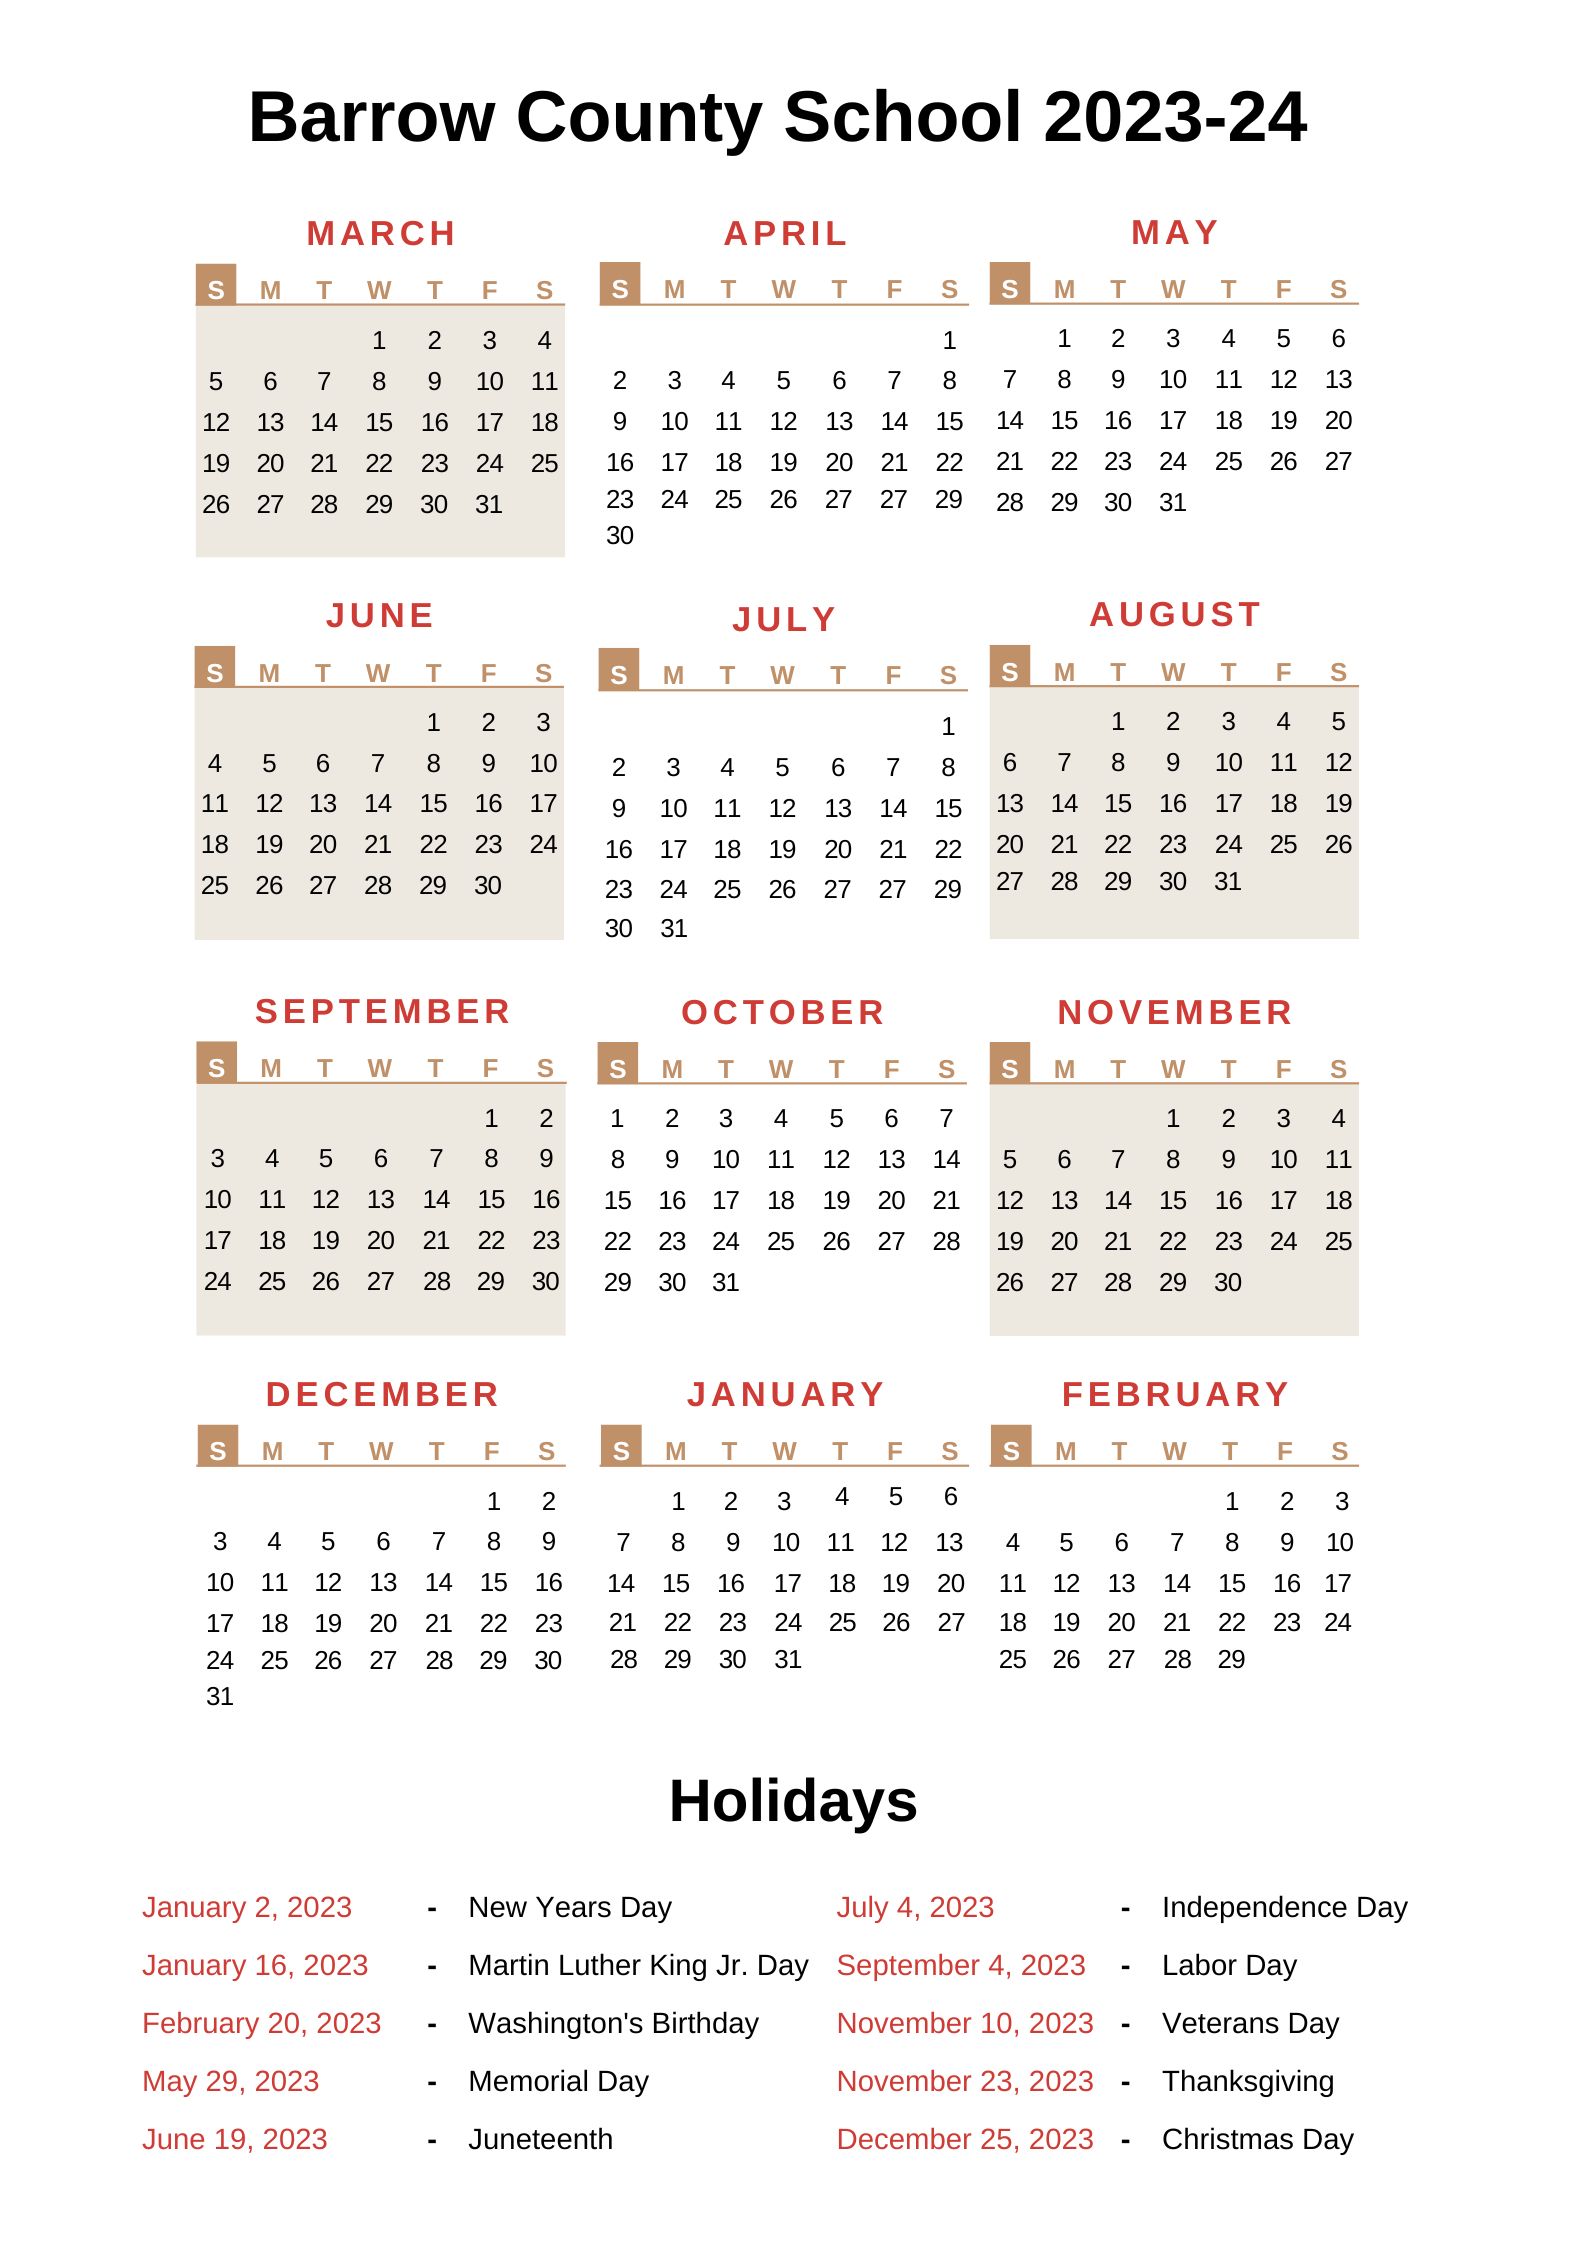 Barrow County Schools Calendar 202324 with Holidays